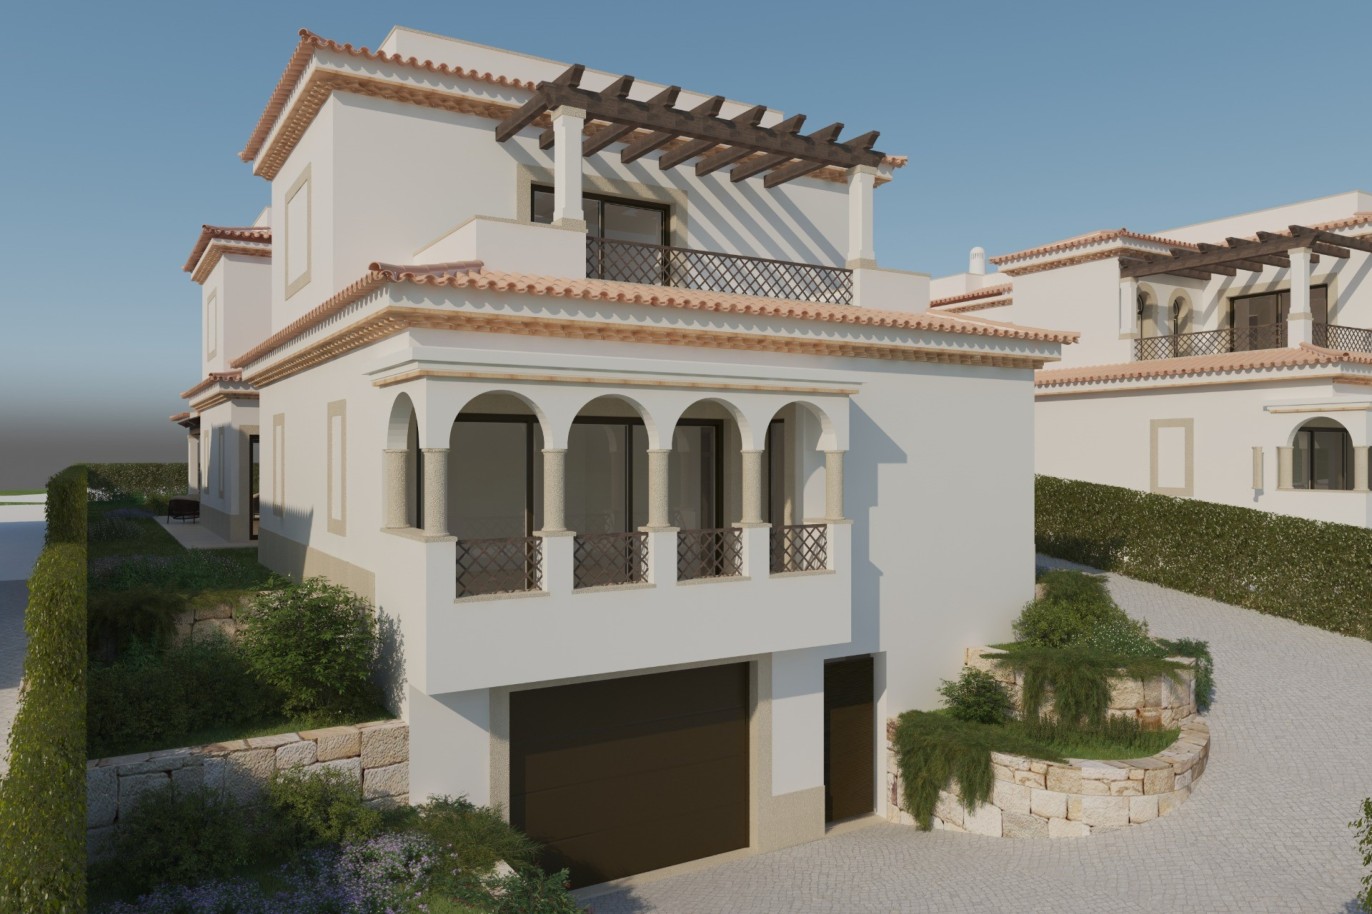 4 Bedroom Luxury Villa with pool for sale in Albufeira, Algarve_227979